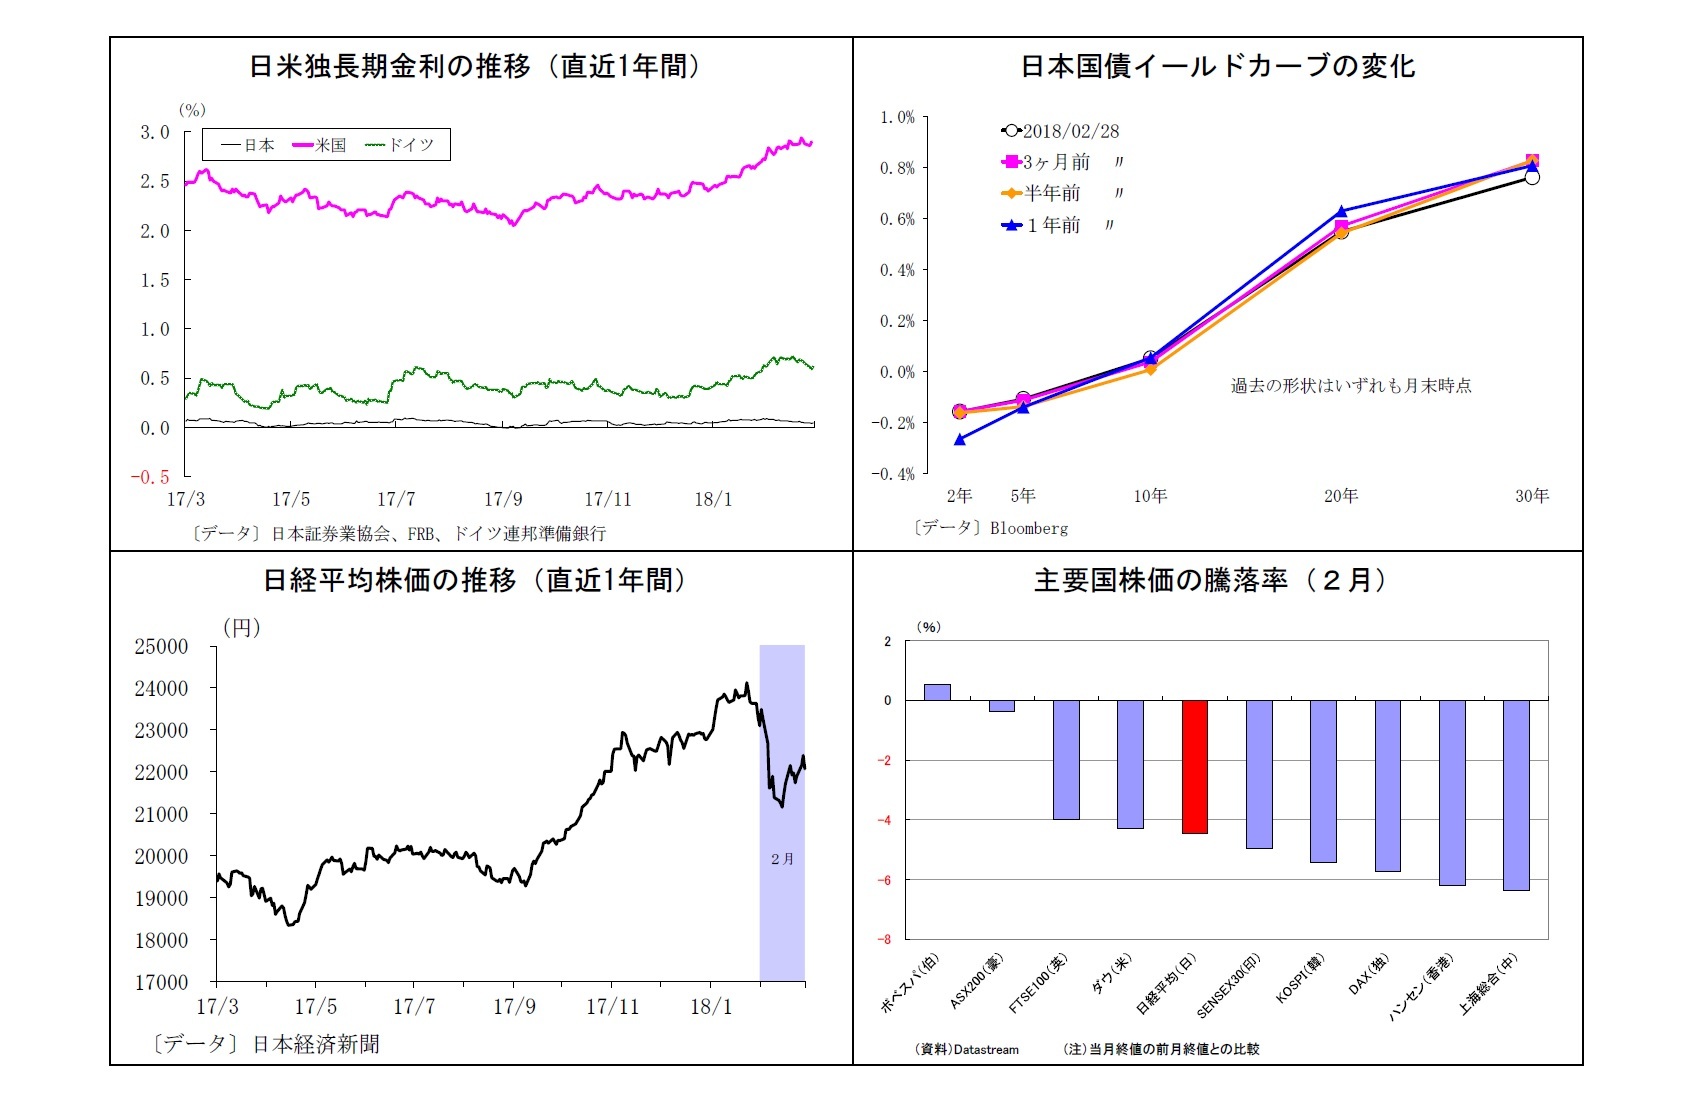 日米独長期金利の推移（直近1年間）/日本国債イールドカーブの変化/日経平均株価の推移（直近1年間）/主要国株価の騰落率（２月）